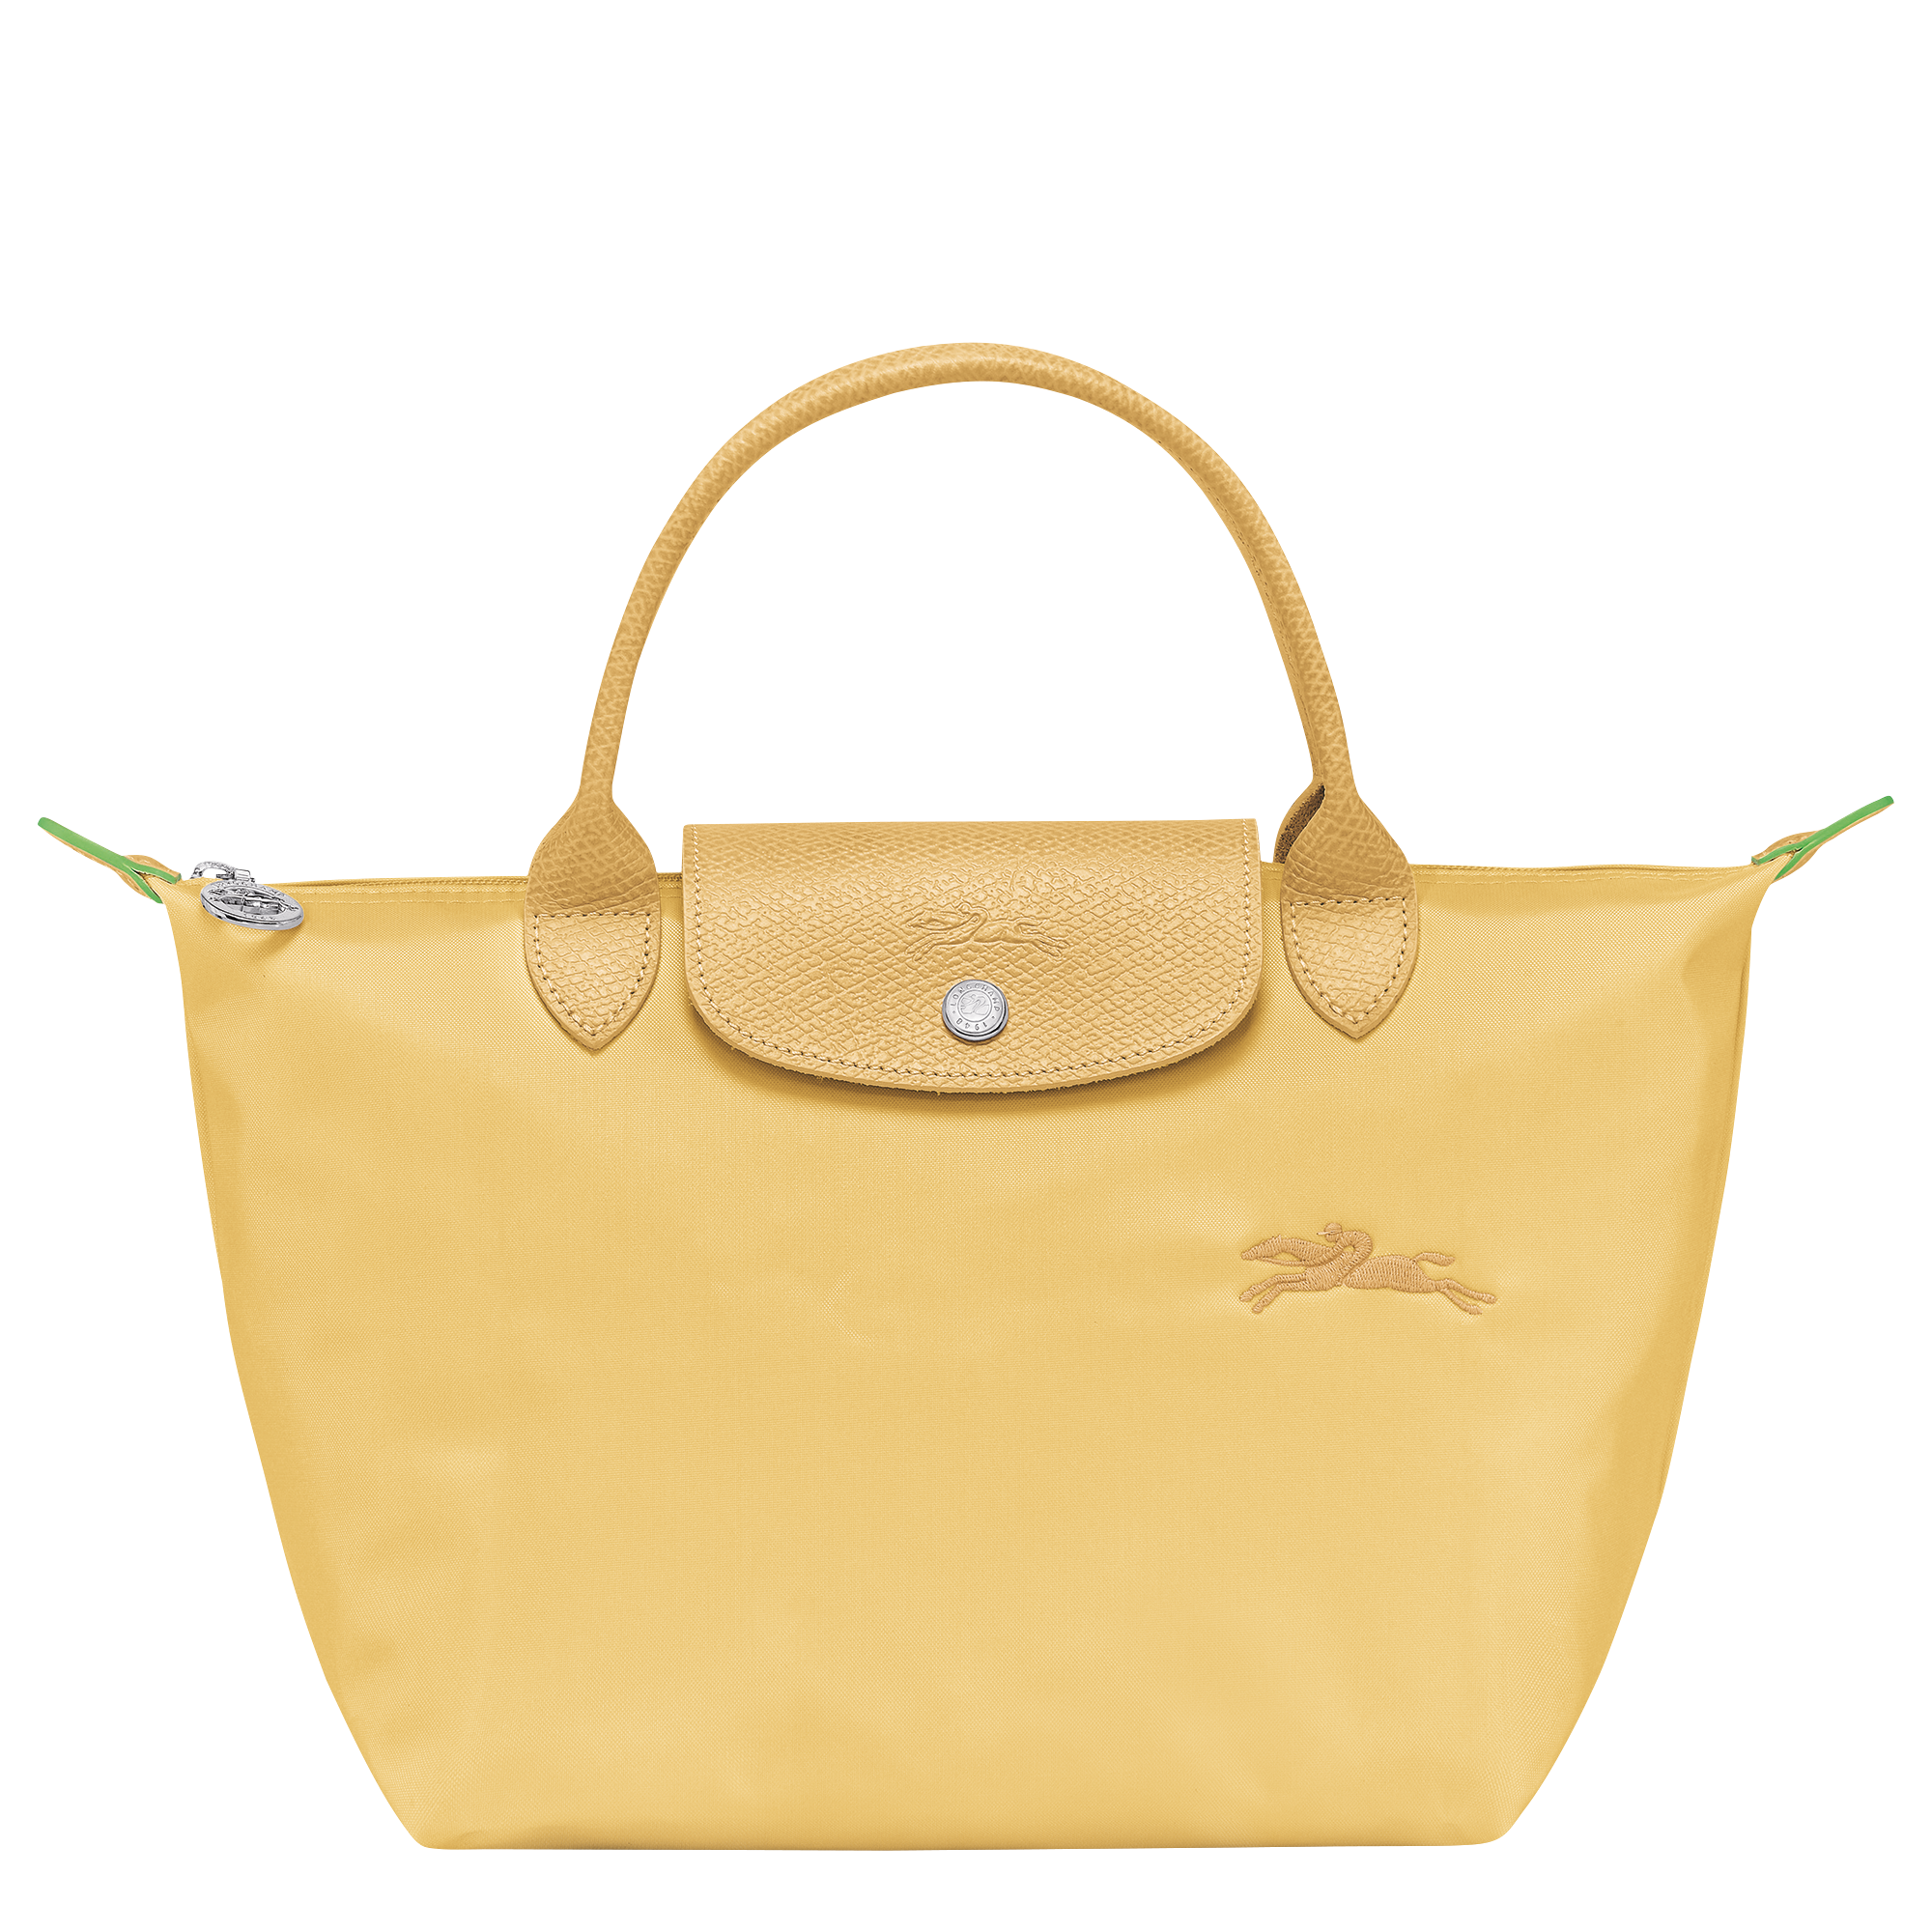 Le Pliage Green Handbag S, Wheat